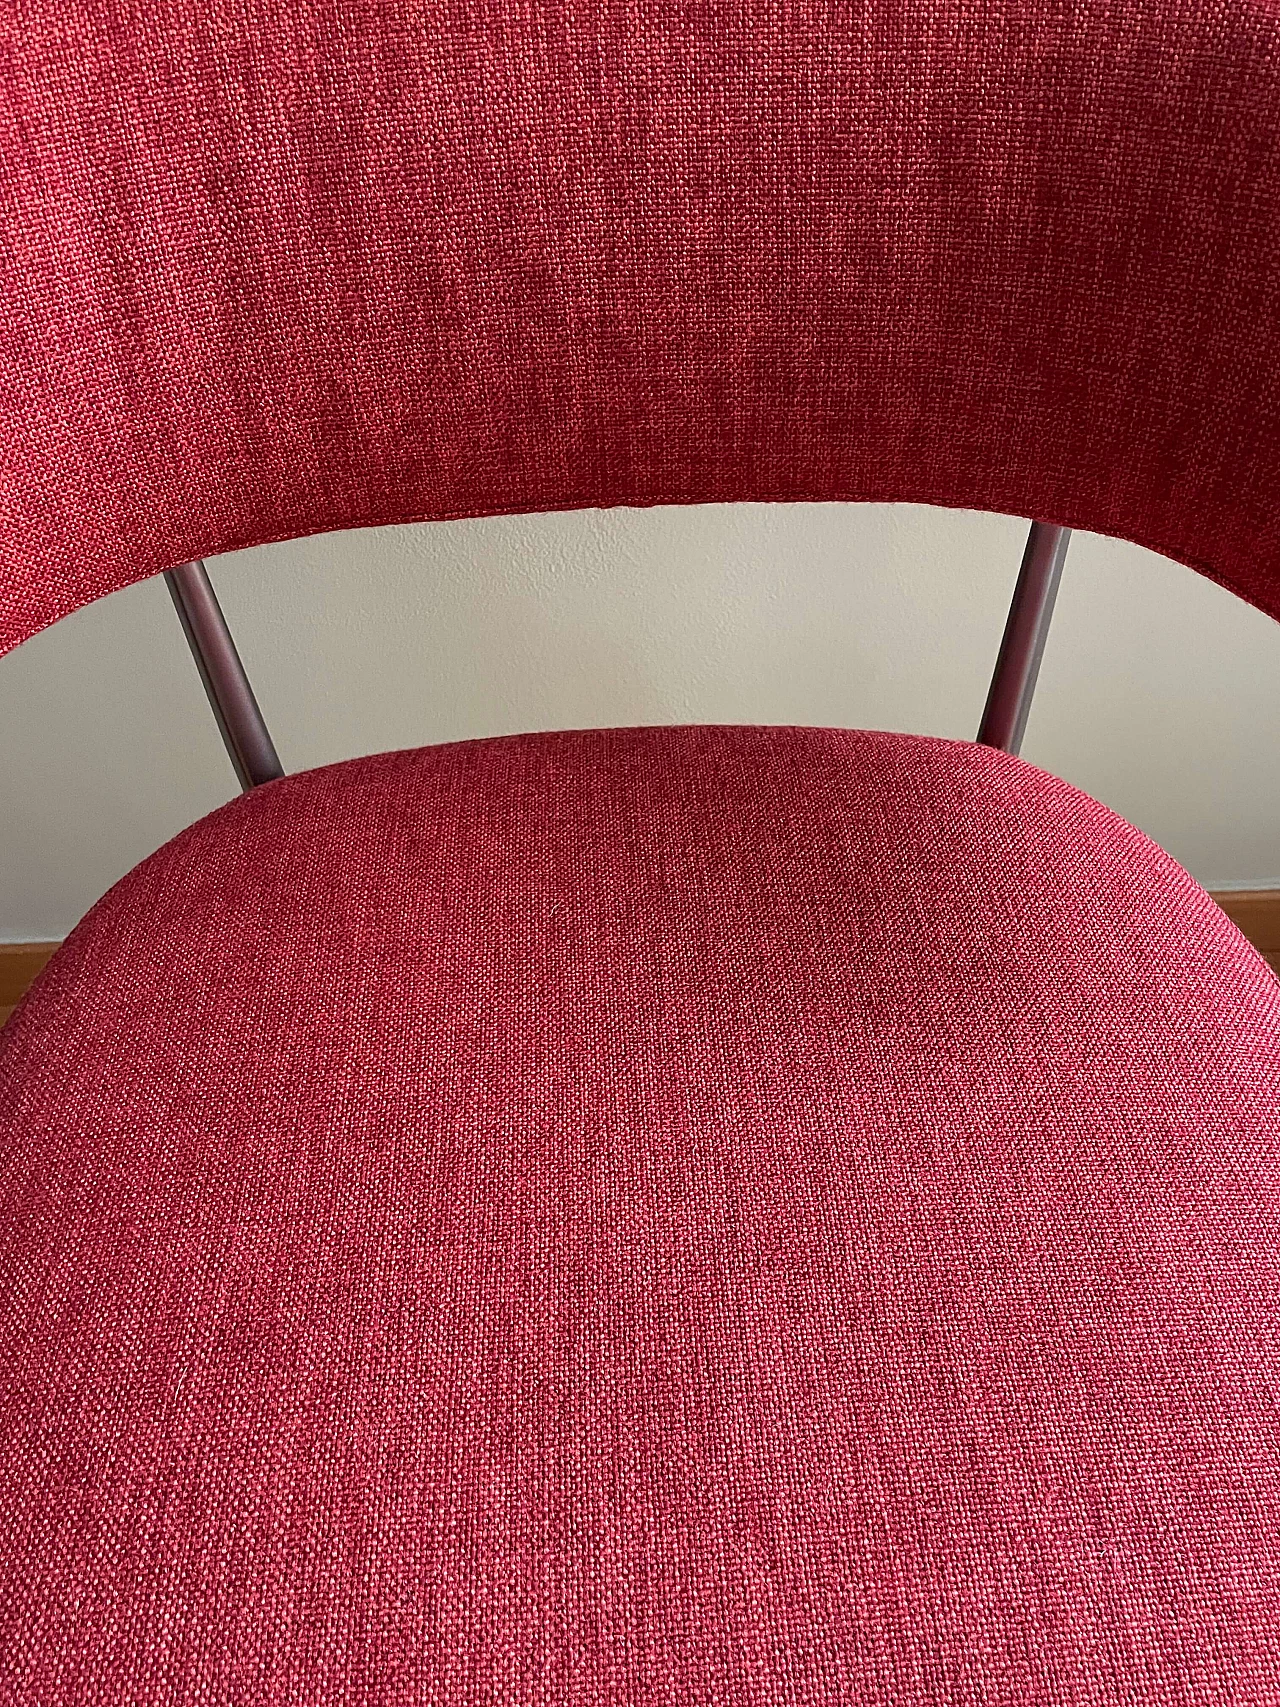 Caratos chair in aluminium and red fabric by Antonio Citterio for Maxalto, 2000s 3